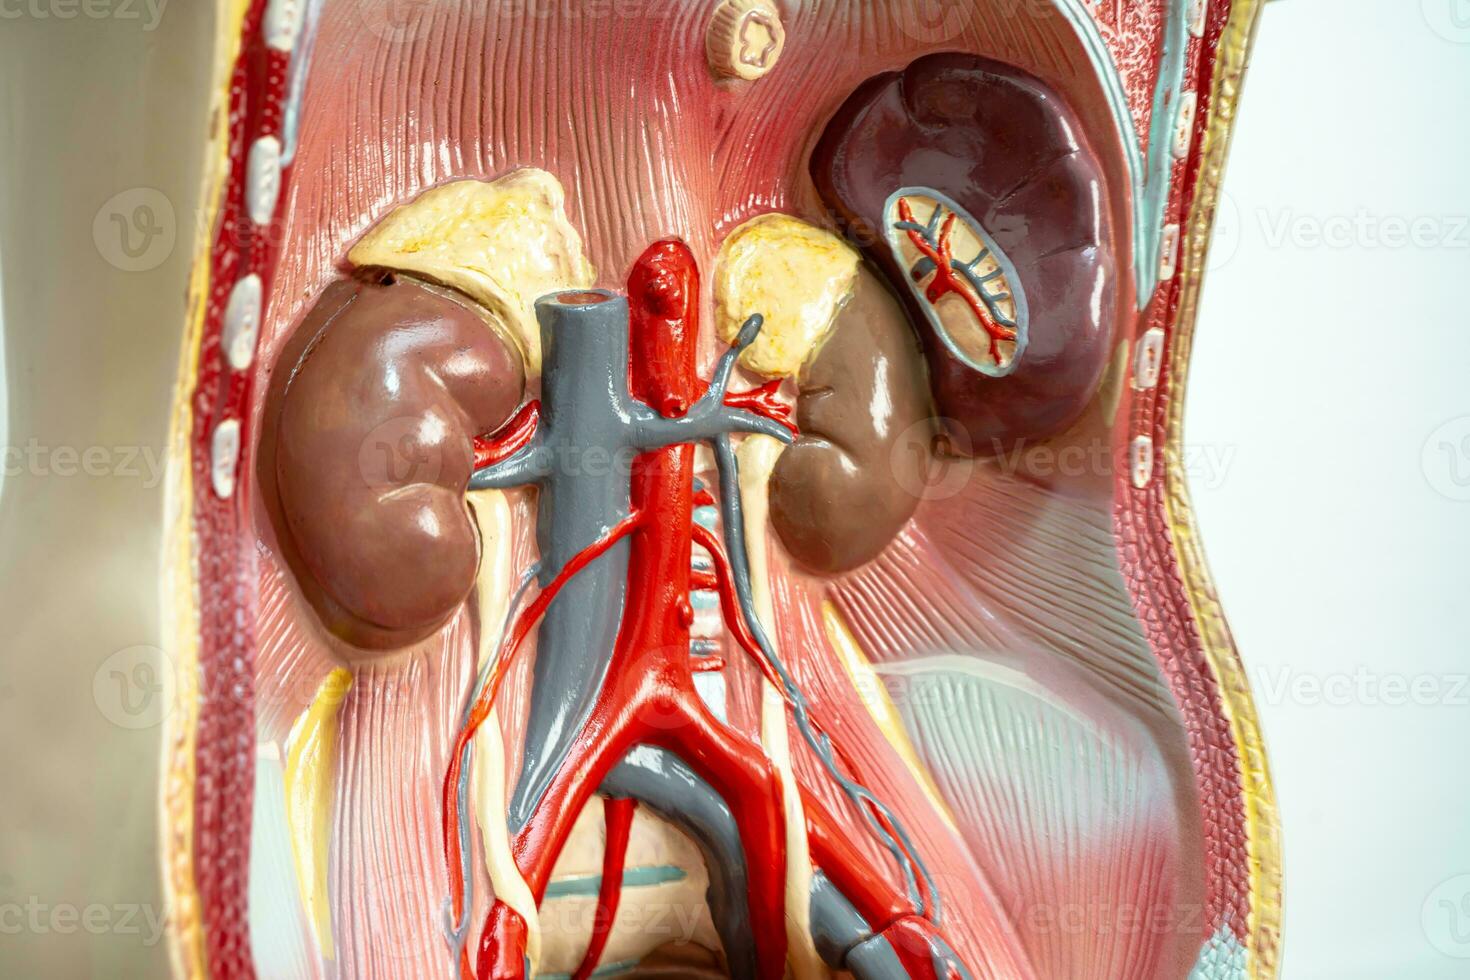 Human kidney model anatomy for medical training course, teaching medicine education. photo